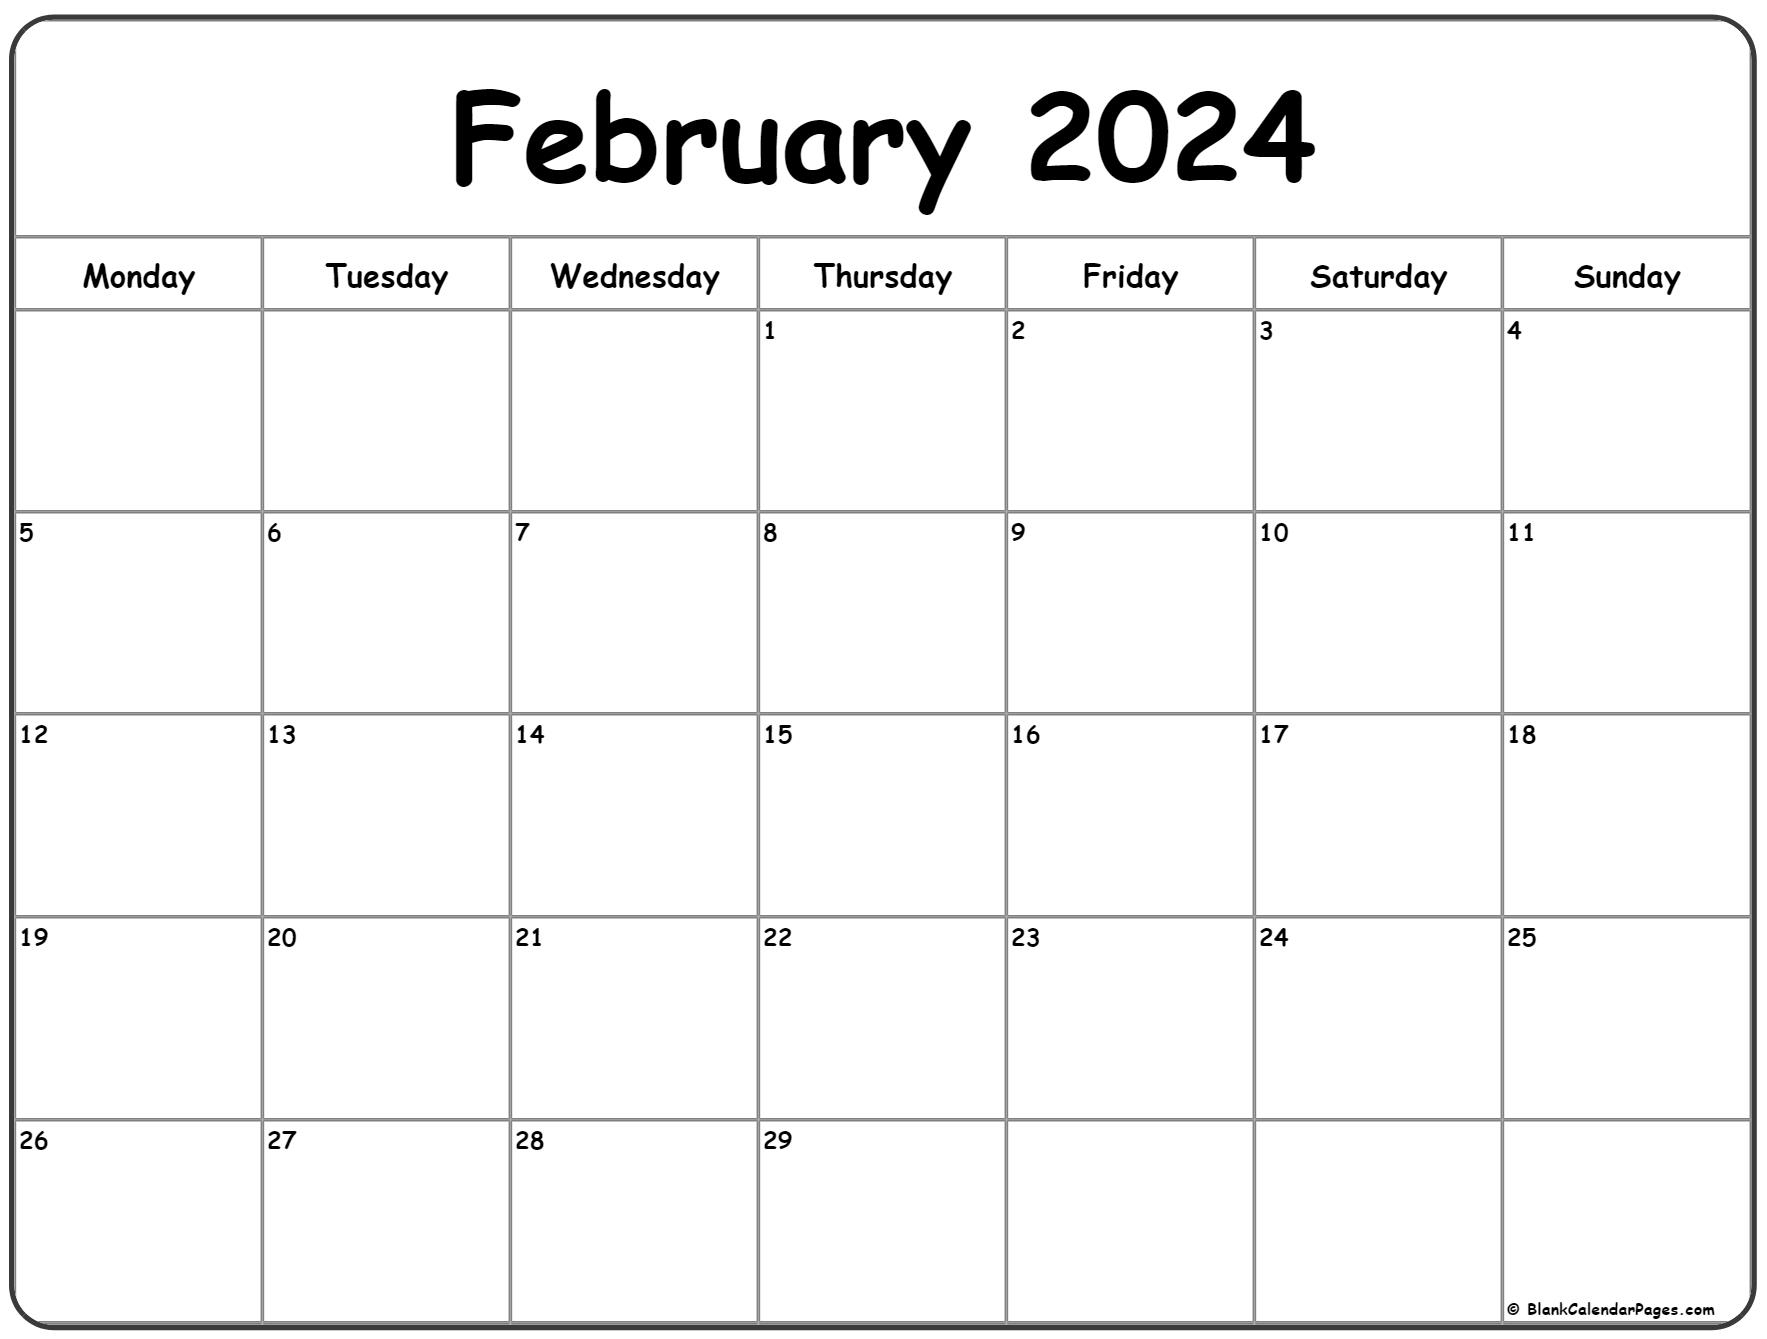 February 2024 Monday Calendar | Monday To Sunday for Blank Calendar February 2024 Free Printable